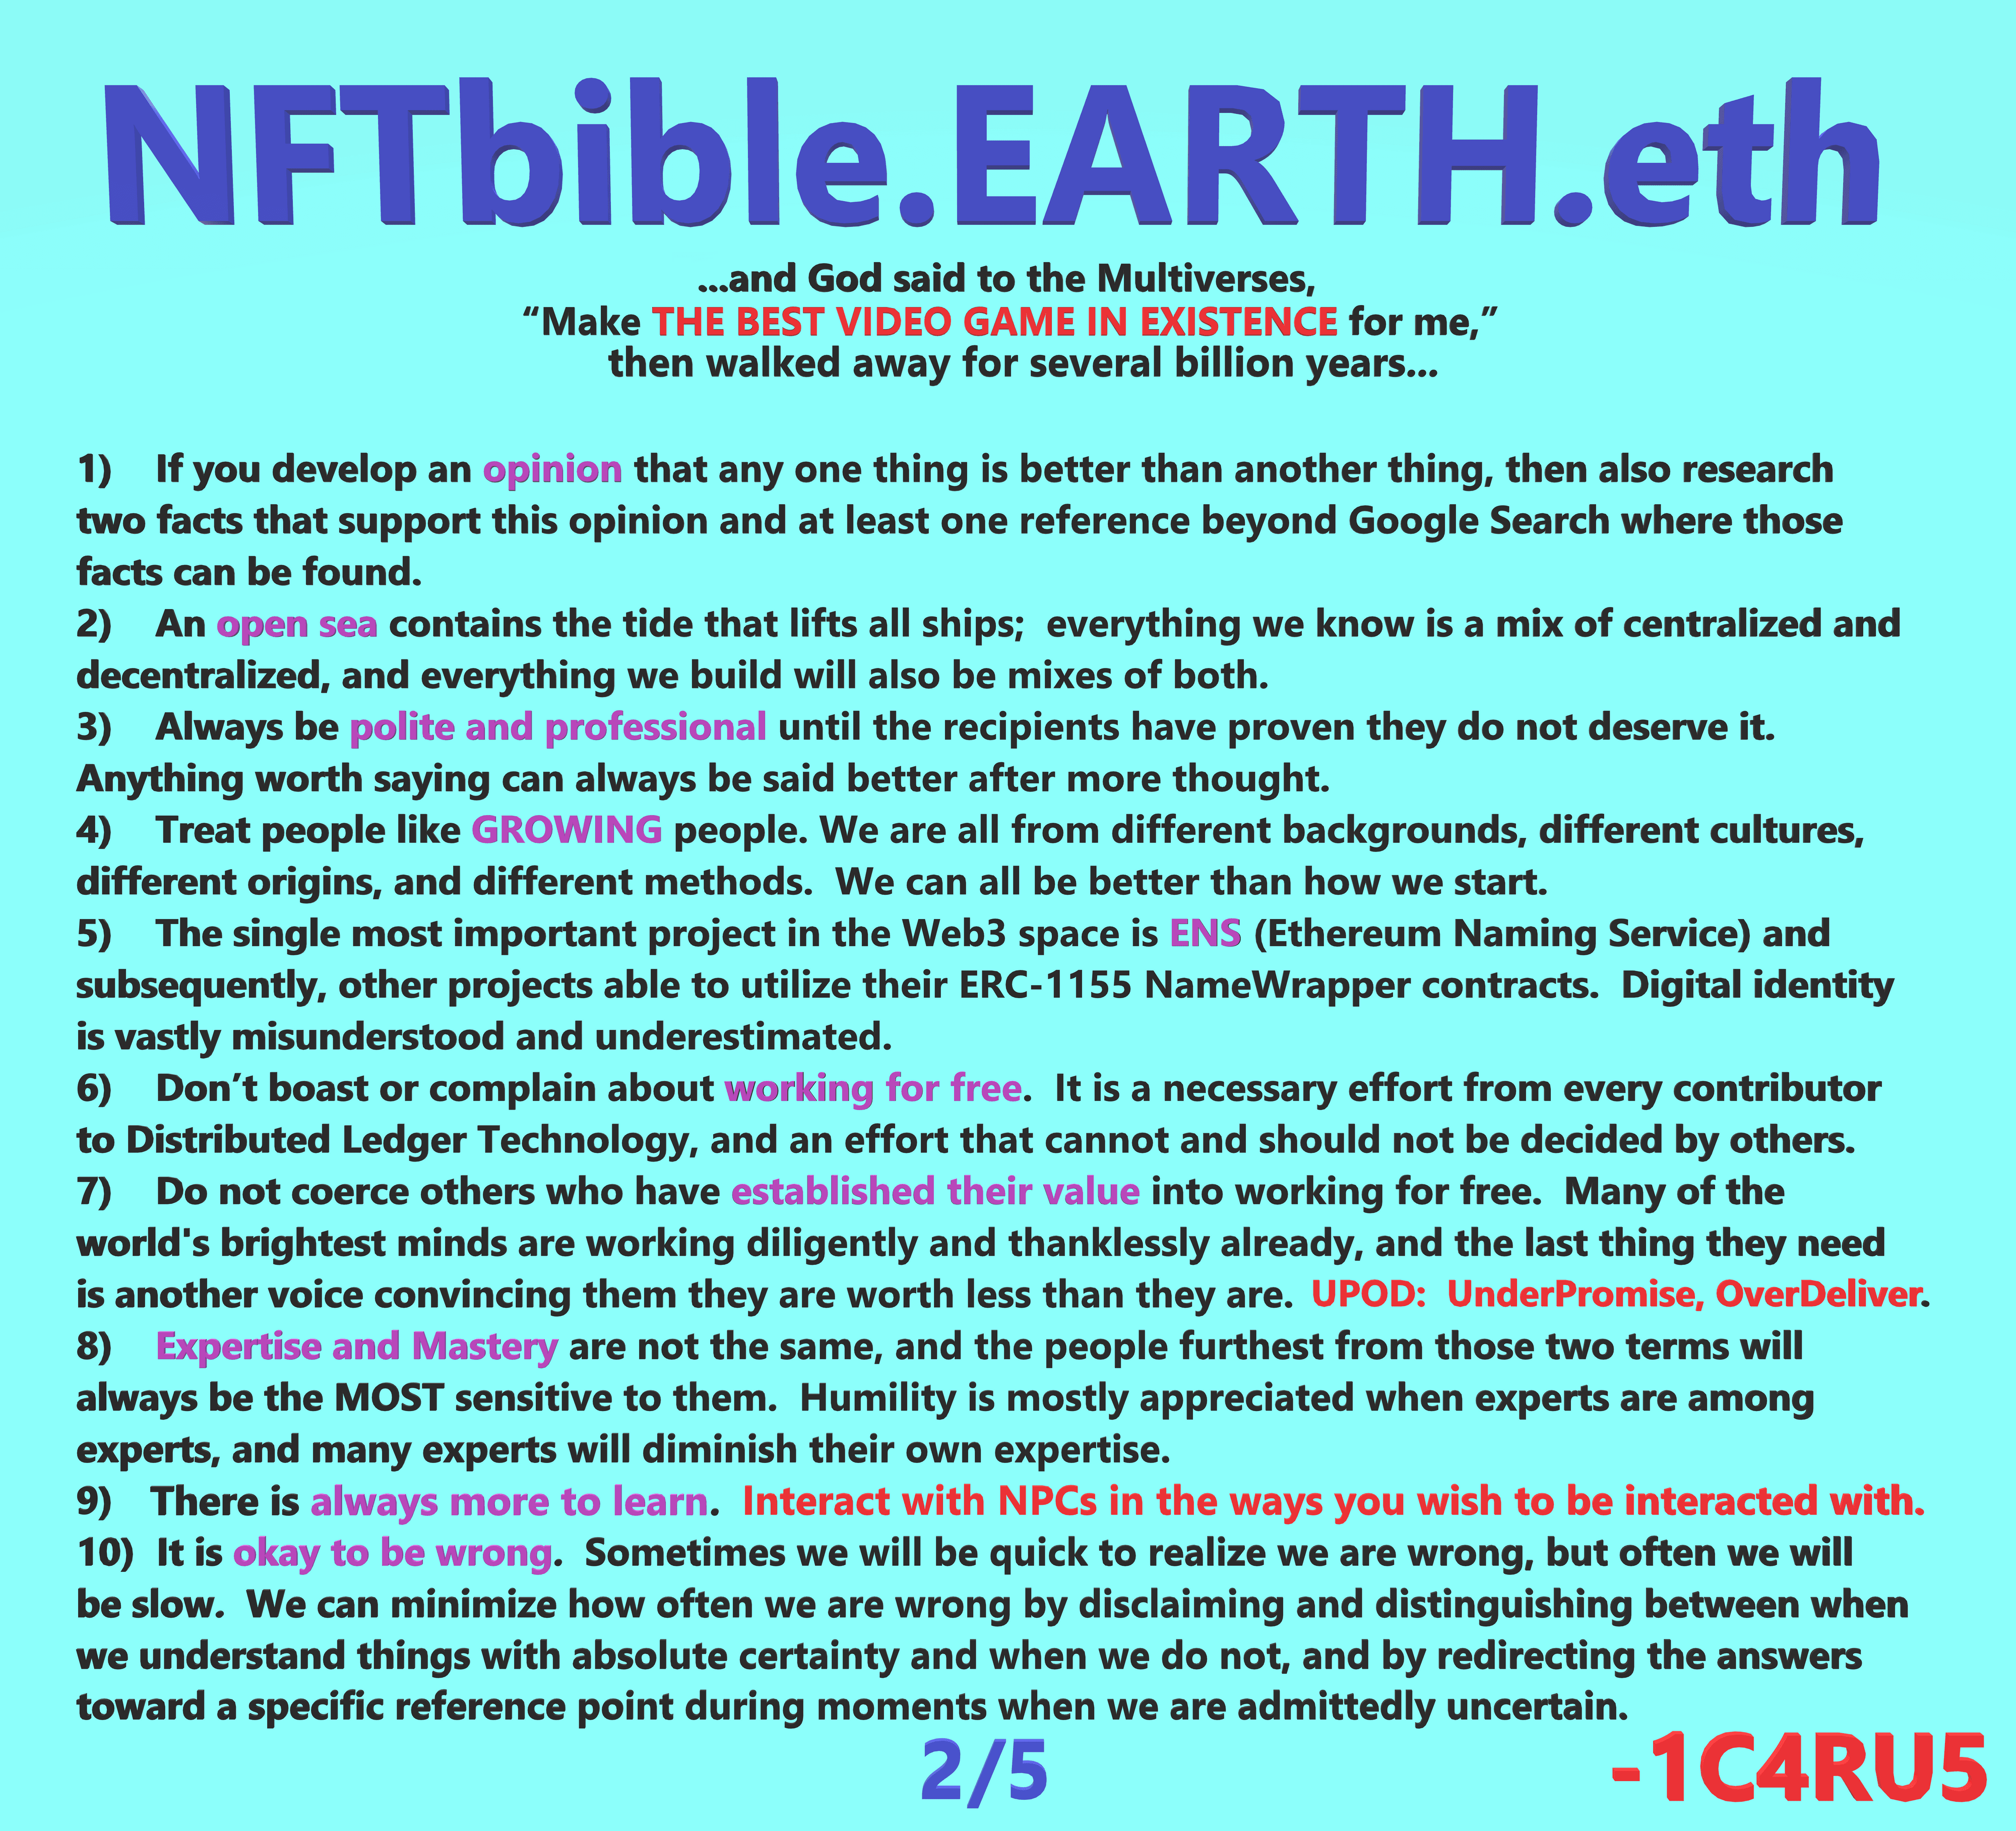 NFTbible by 1C4RU5, Editions 2-5